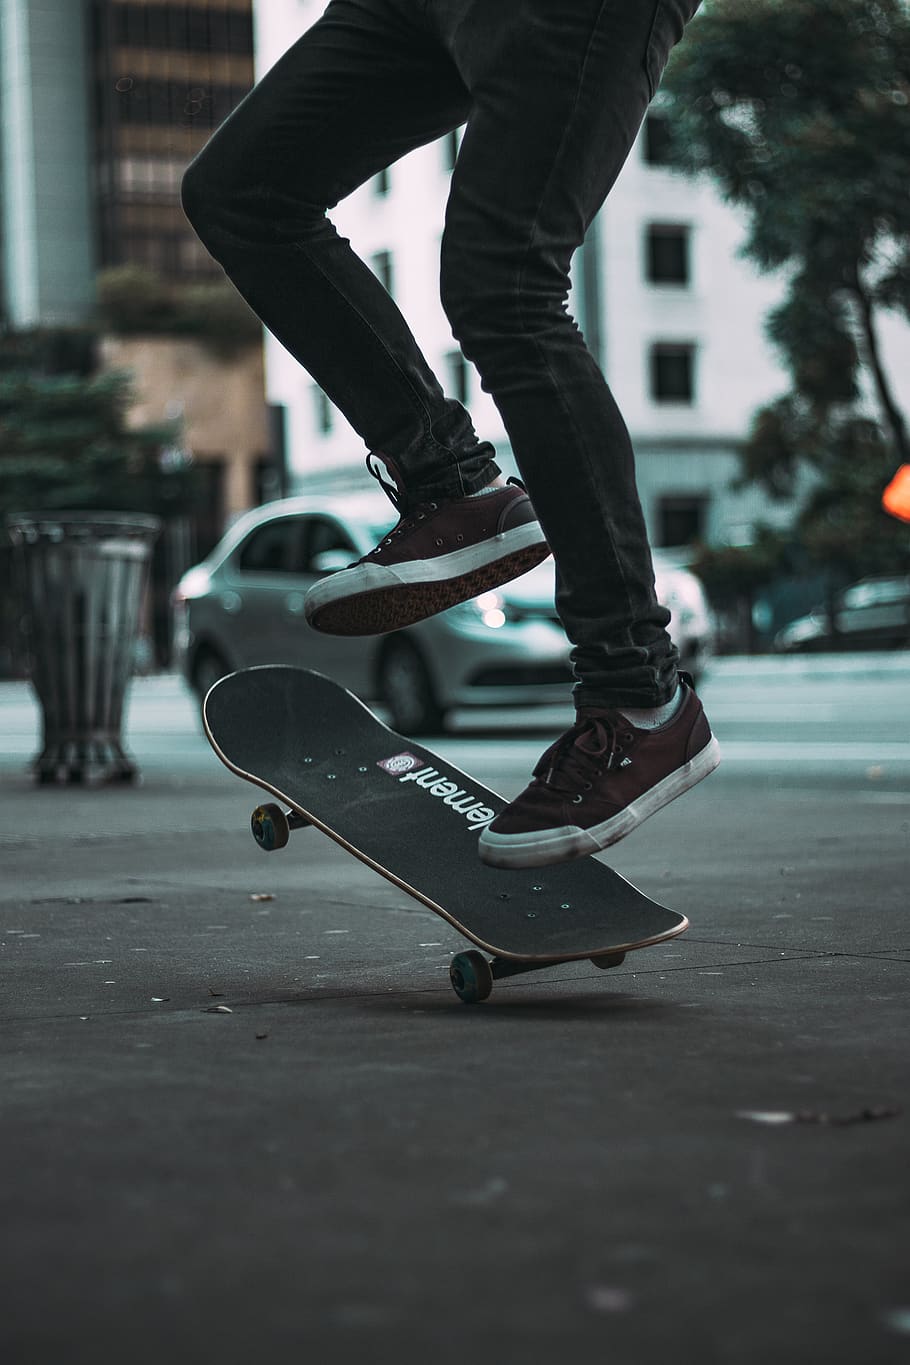 Skateboarding 1080P, 2K, 4K, 5K HD wallpaper free download